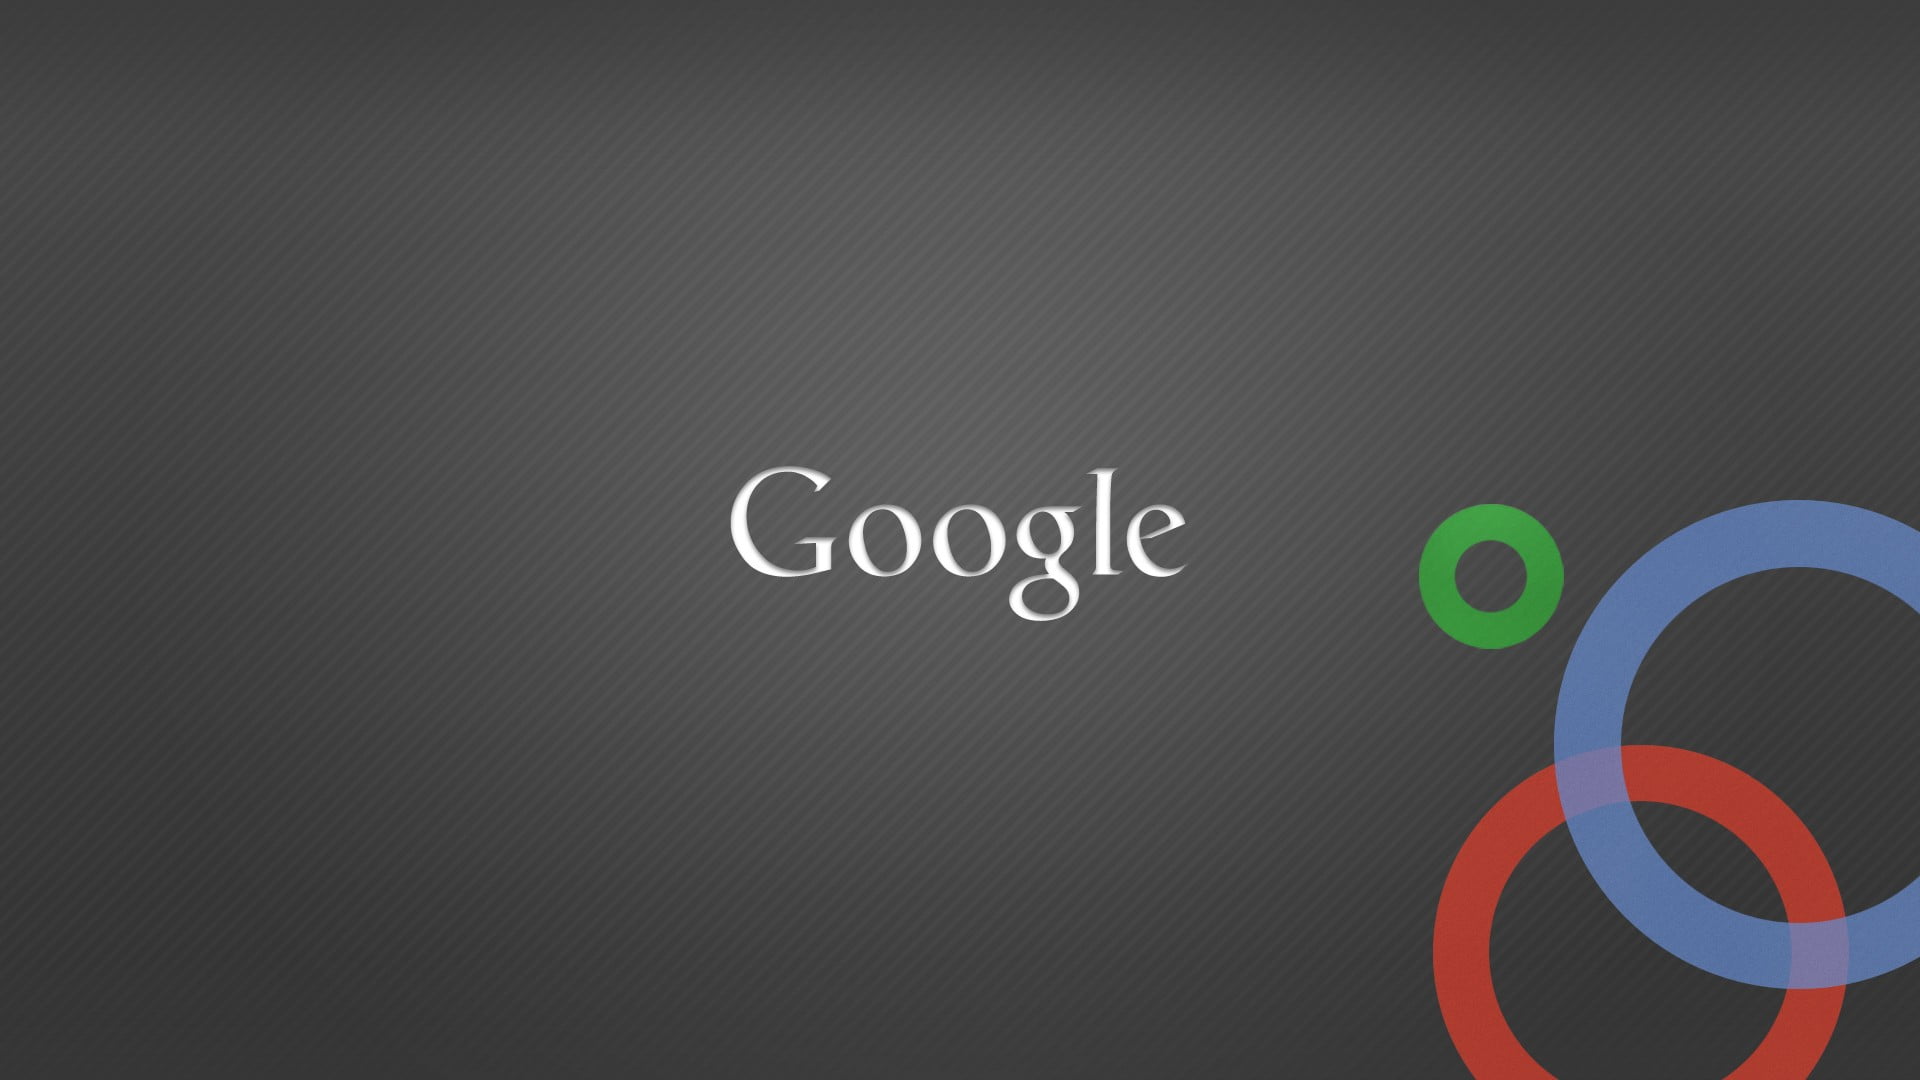 Google logo, Google Chrome, communication, text, western script